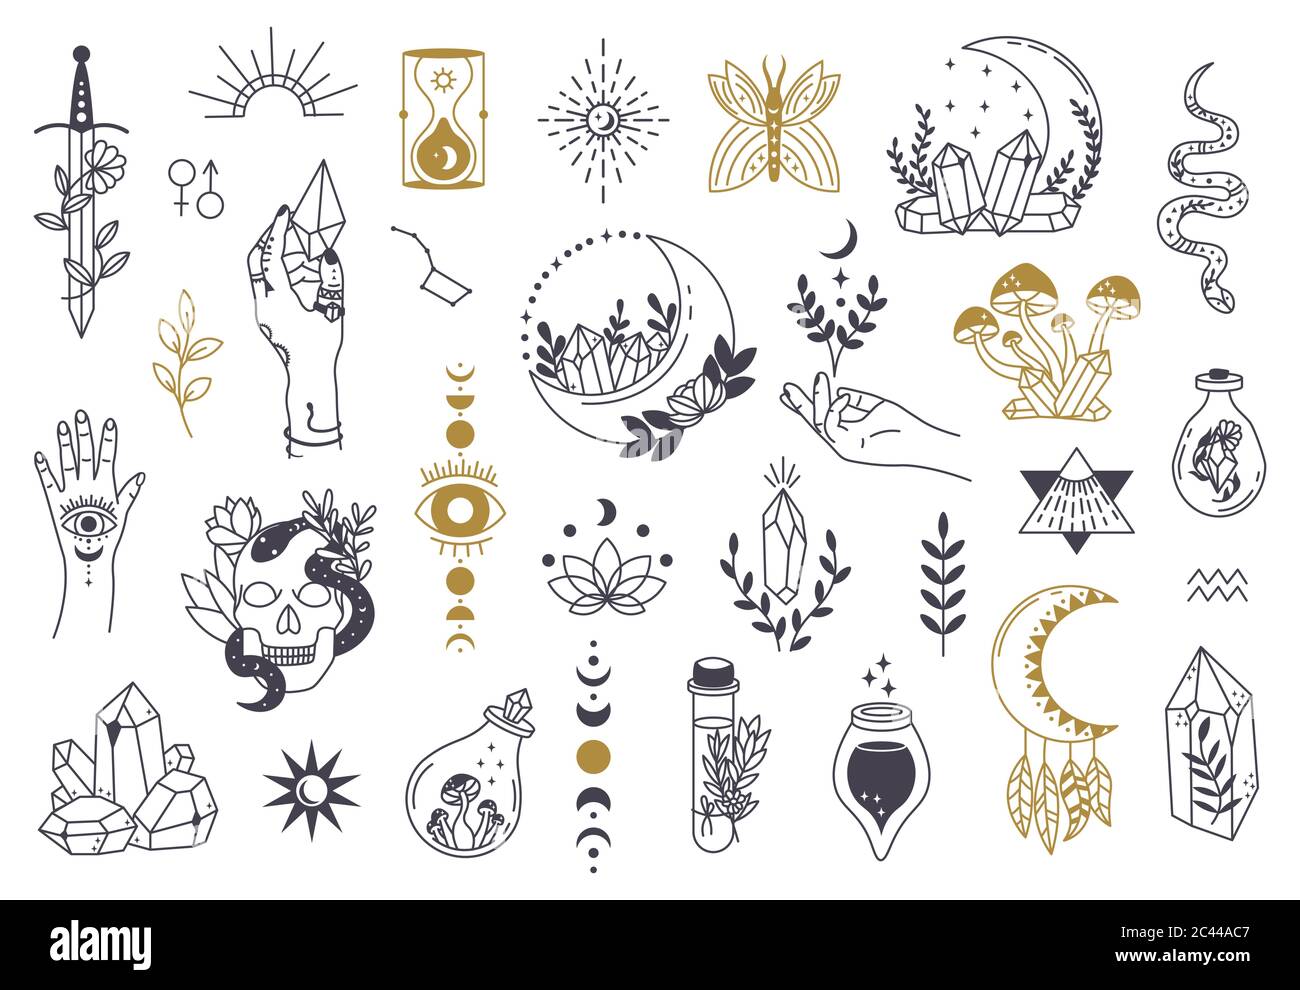 https://c8.alamy.com/comp/2C44AC7/witch-magic-symbols-doodle-esoteric-boho-mystical-hand-drawn-elements-magic-witchcraft-crystal-eyes-moon-vector-illustration-icons-set-2C44AC7.jpg